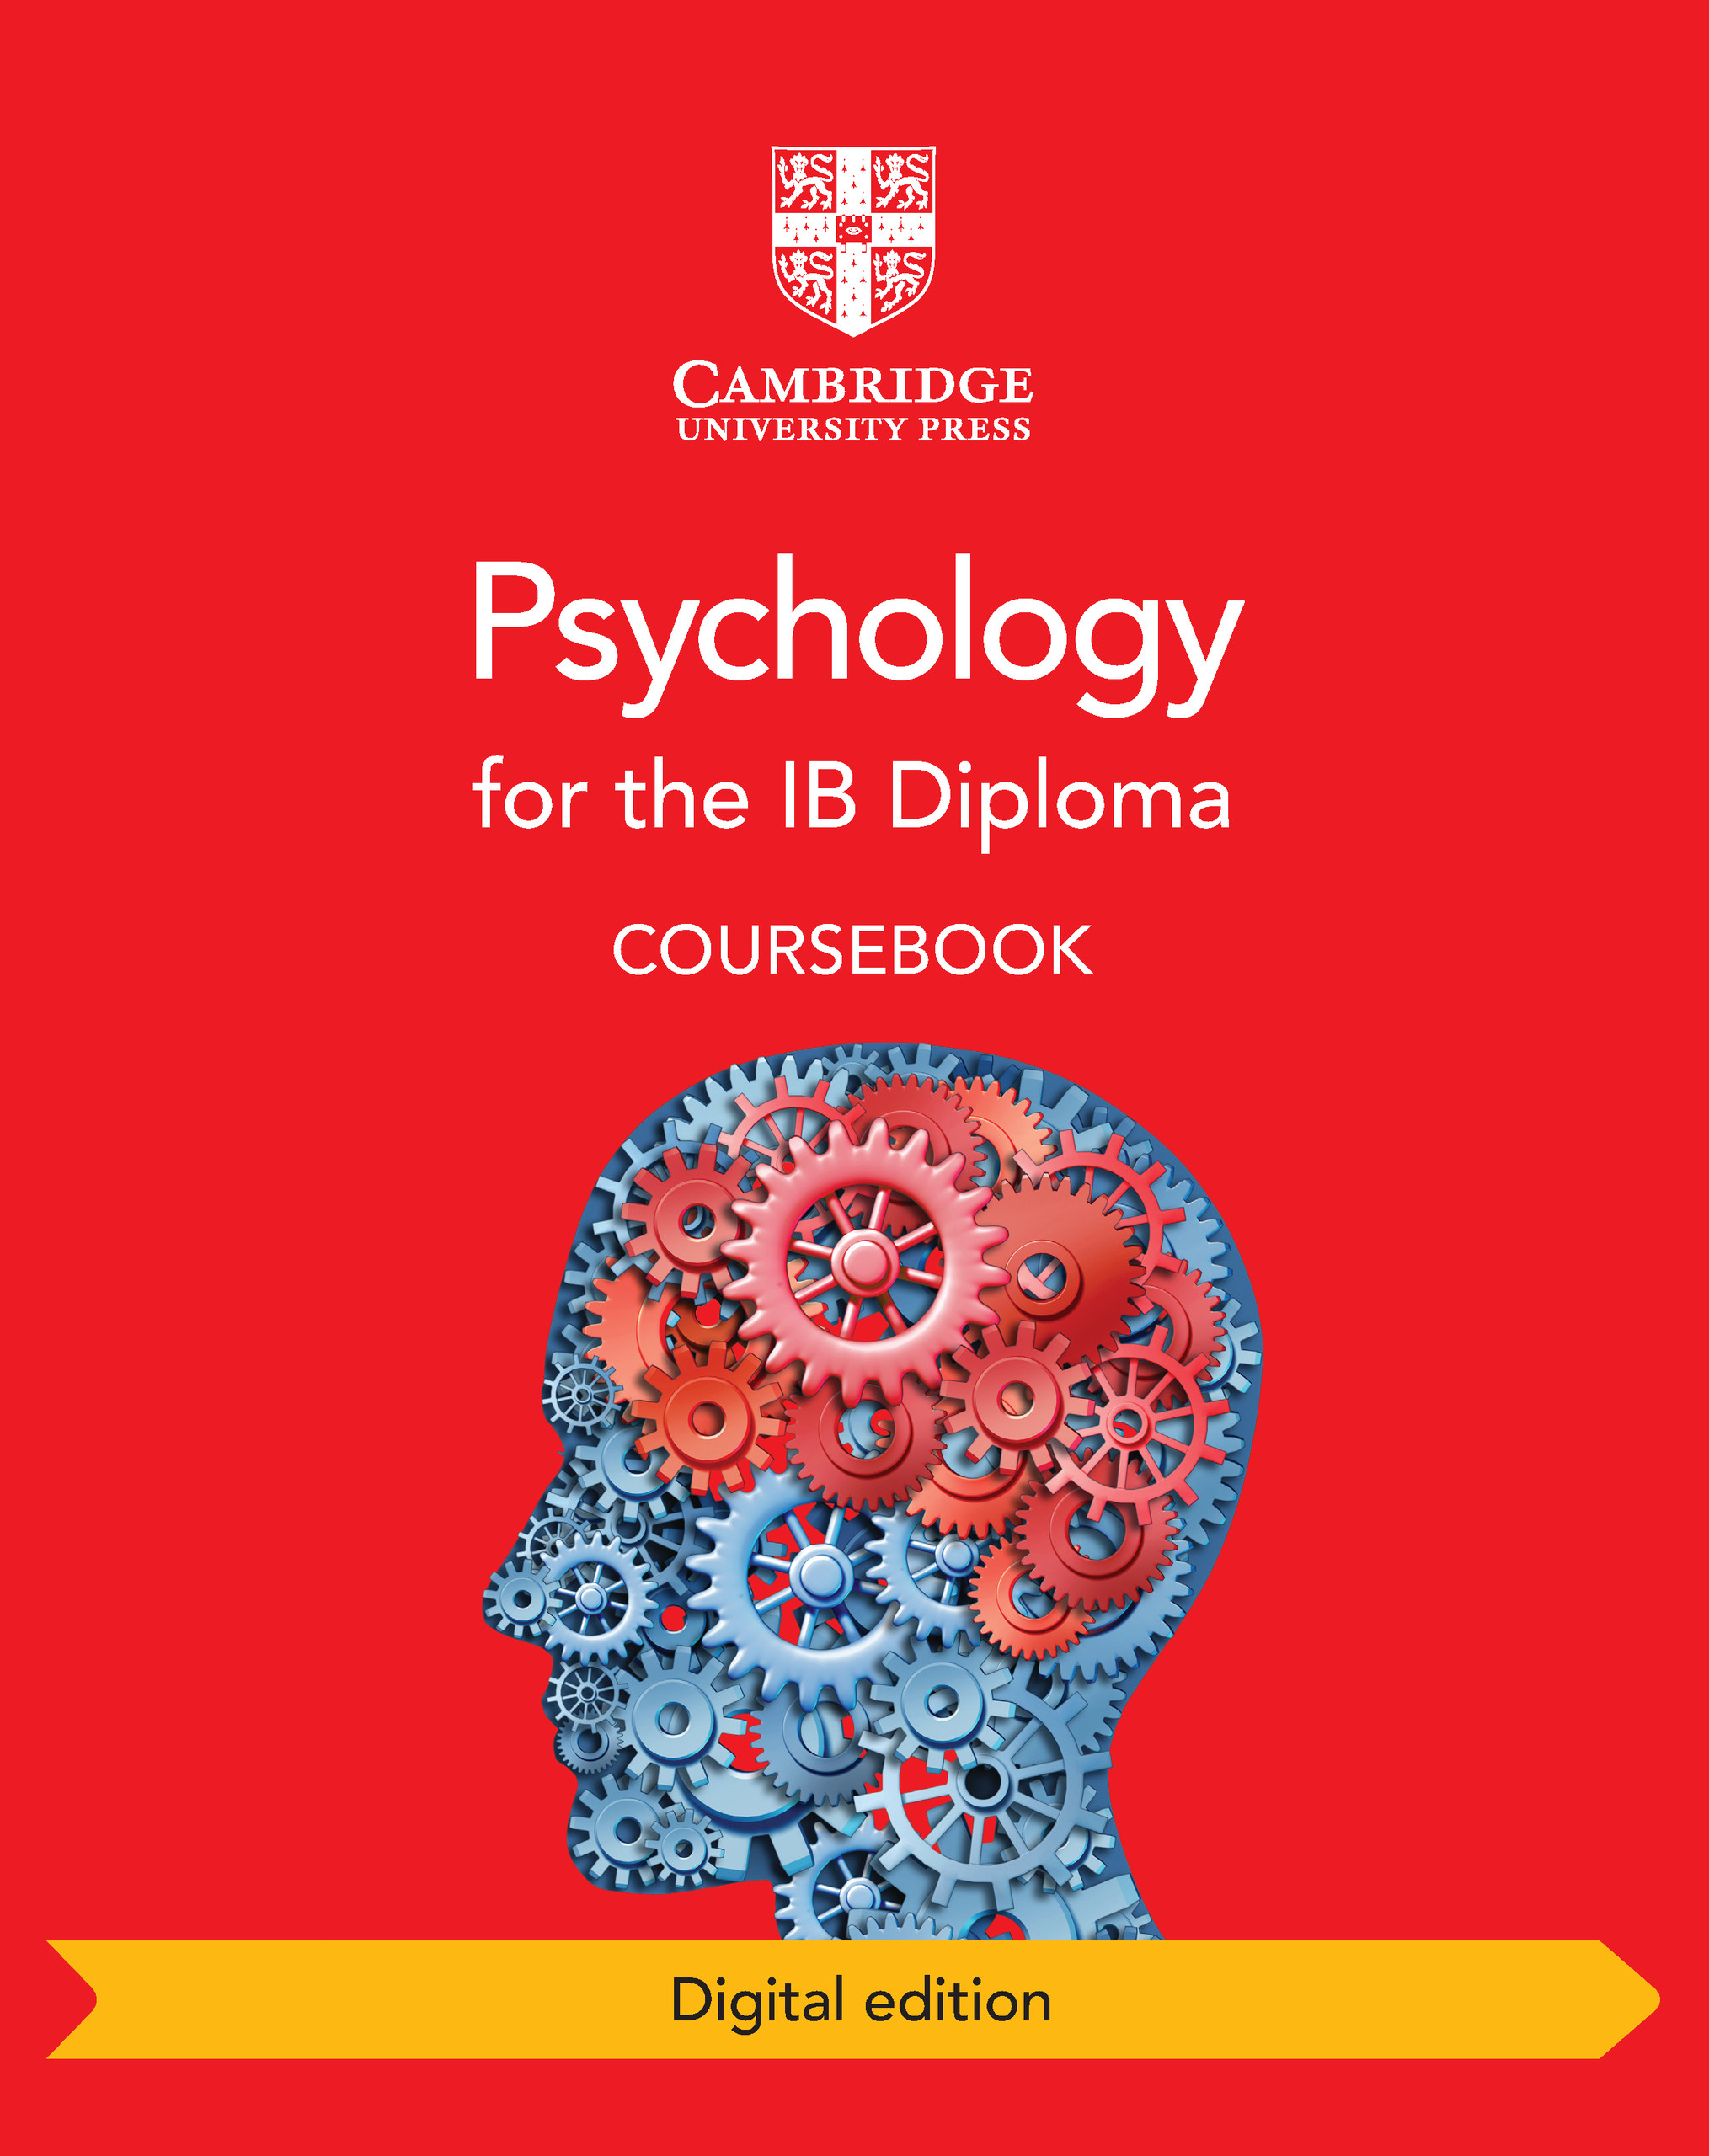 IB Psychology